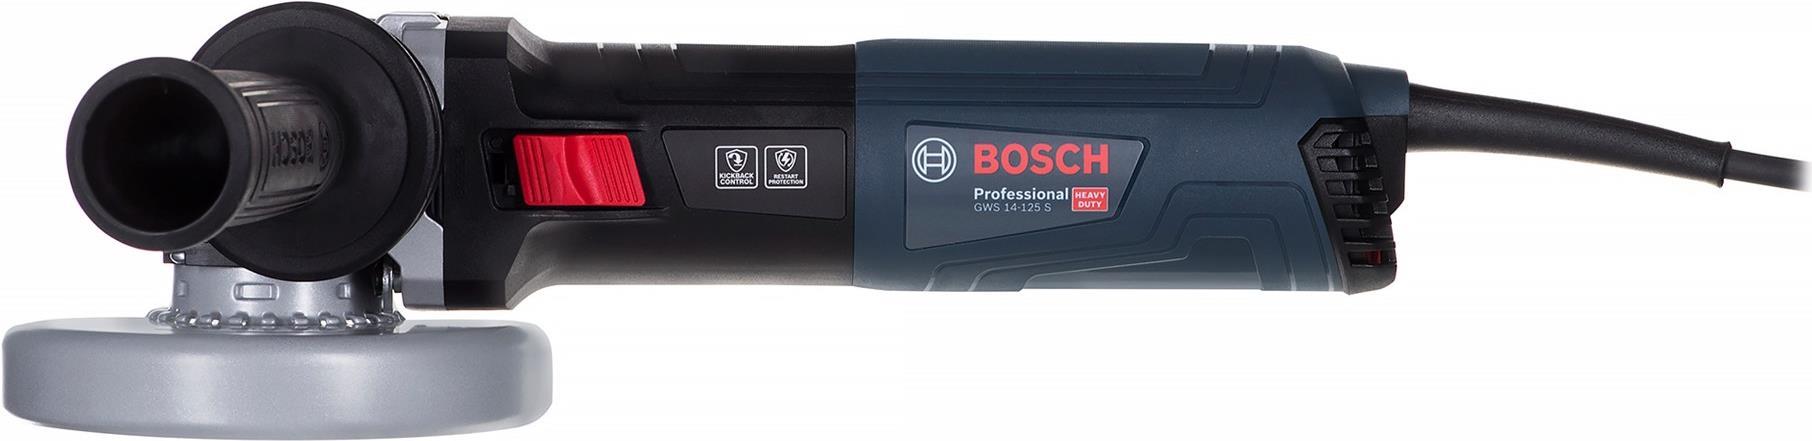 BOSCH GWS Professional 14-125 S - Winkelschleifer - 1400 W - 125 mm - ohne Batterie